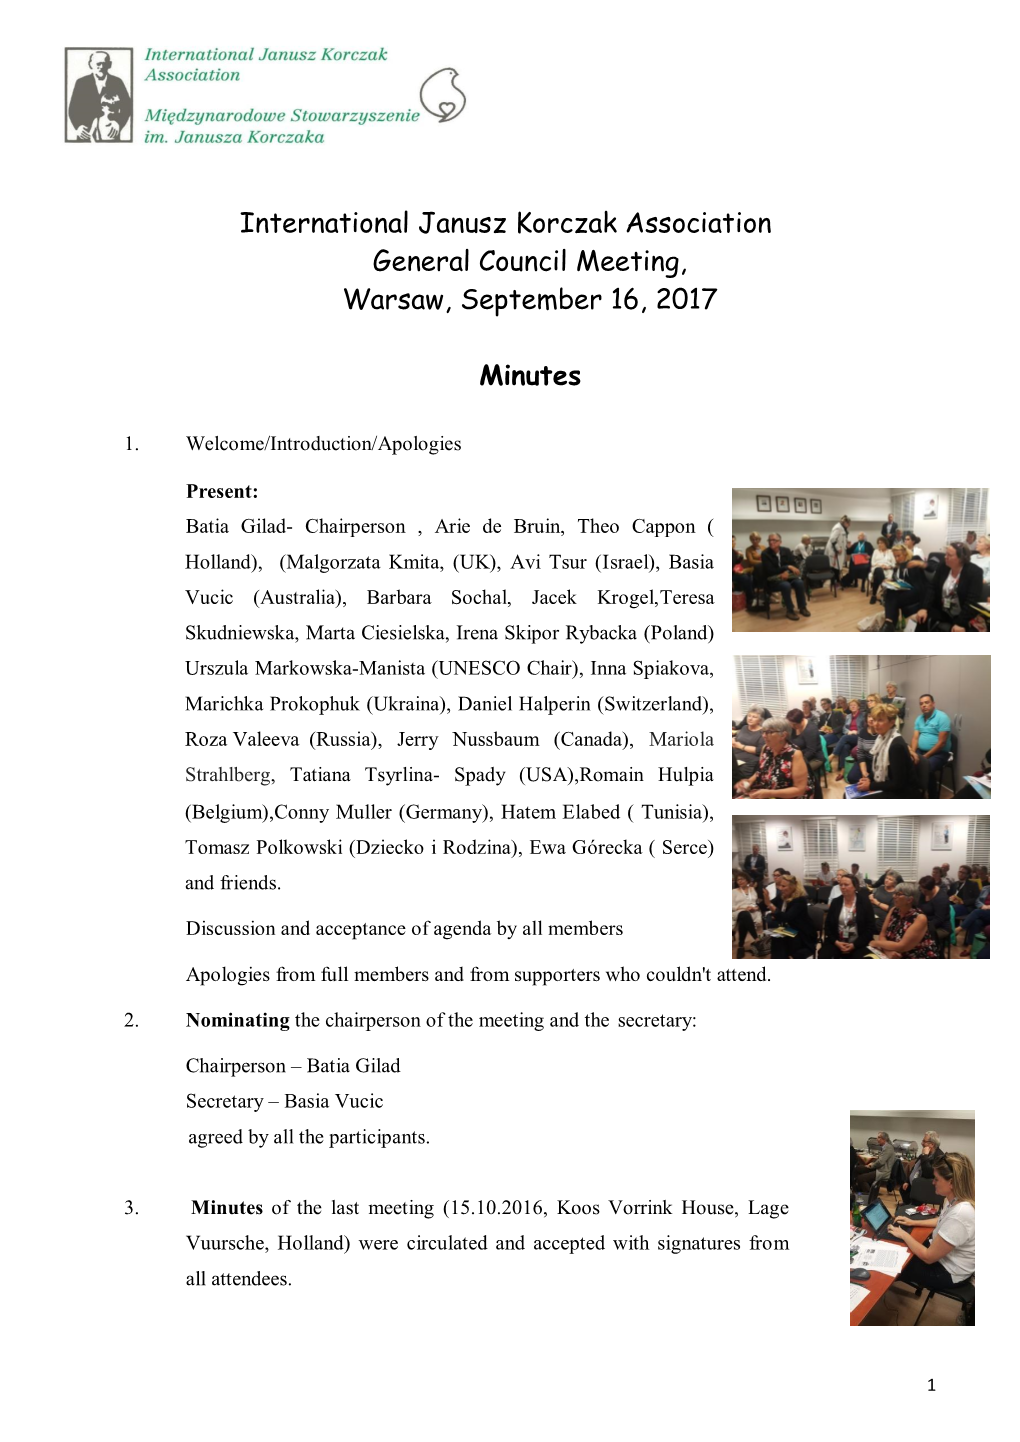 International Janusz Korczak Association General Council Meeting, Warsaw, September 16, 2017